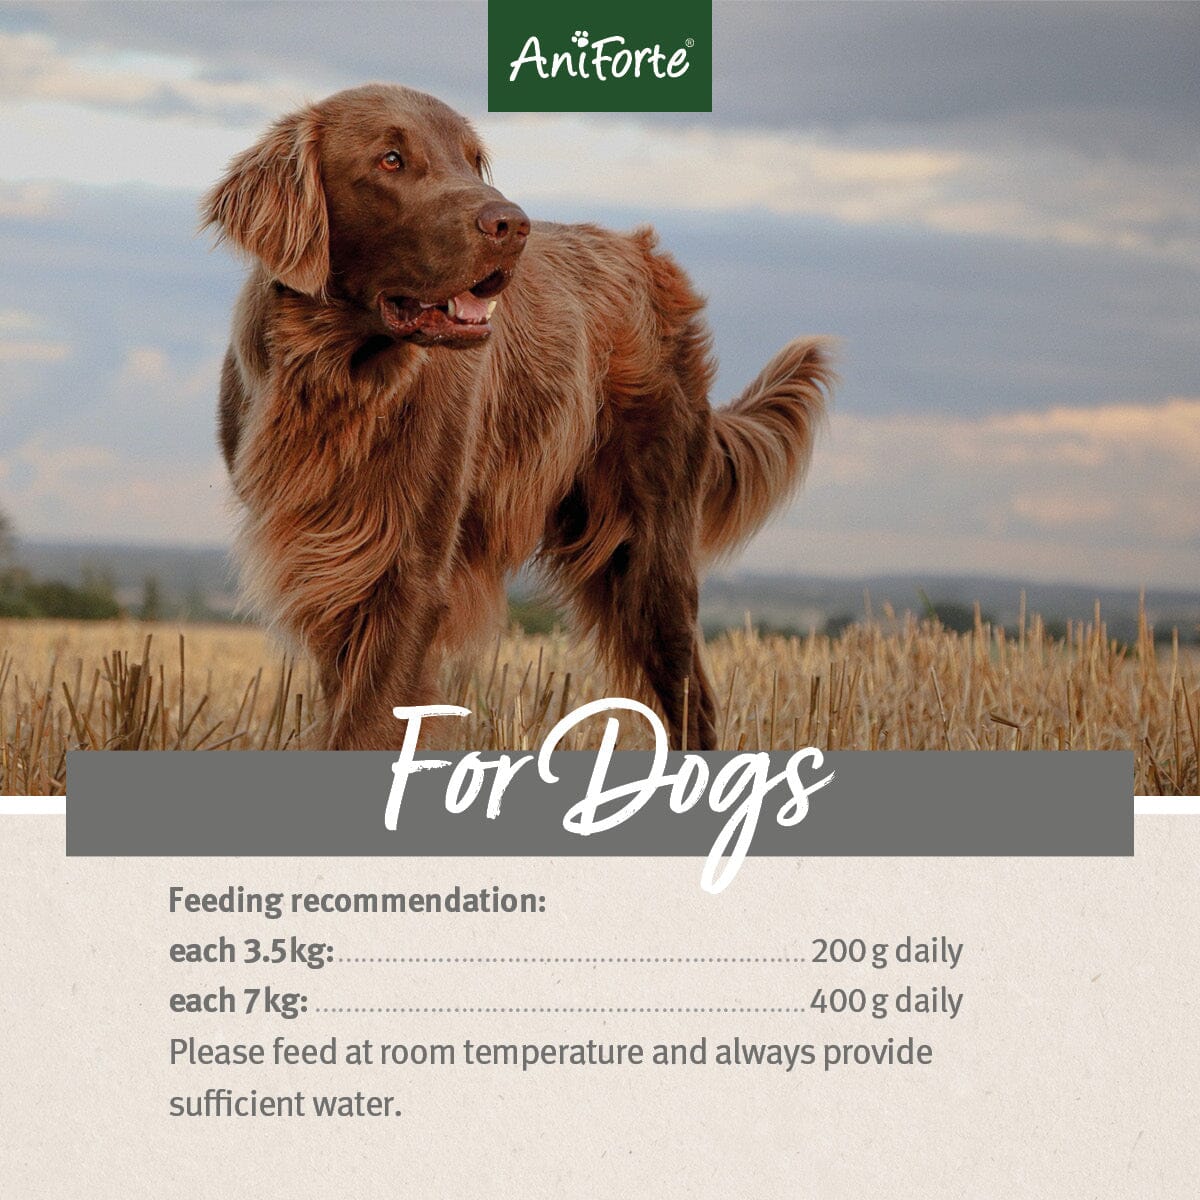 PureNature Farms Lamb - Wet Food for Dogs - AniForte UK